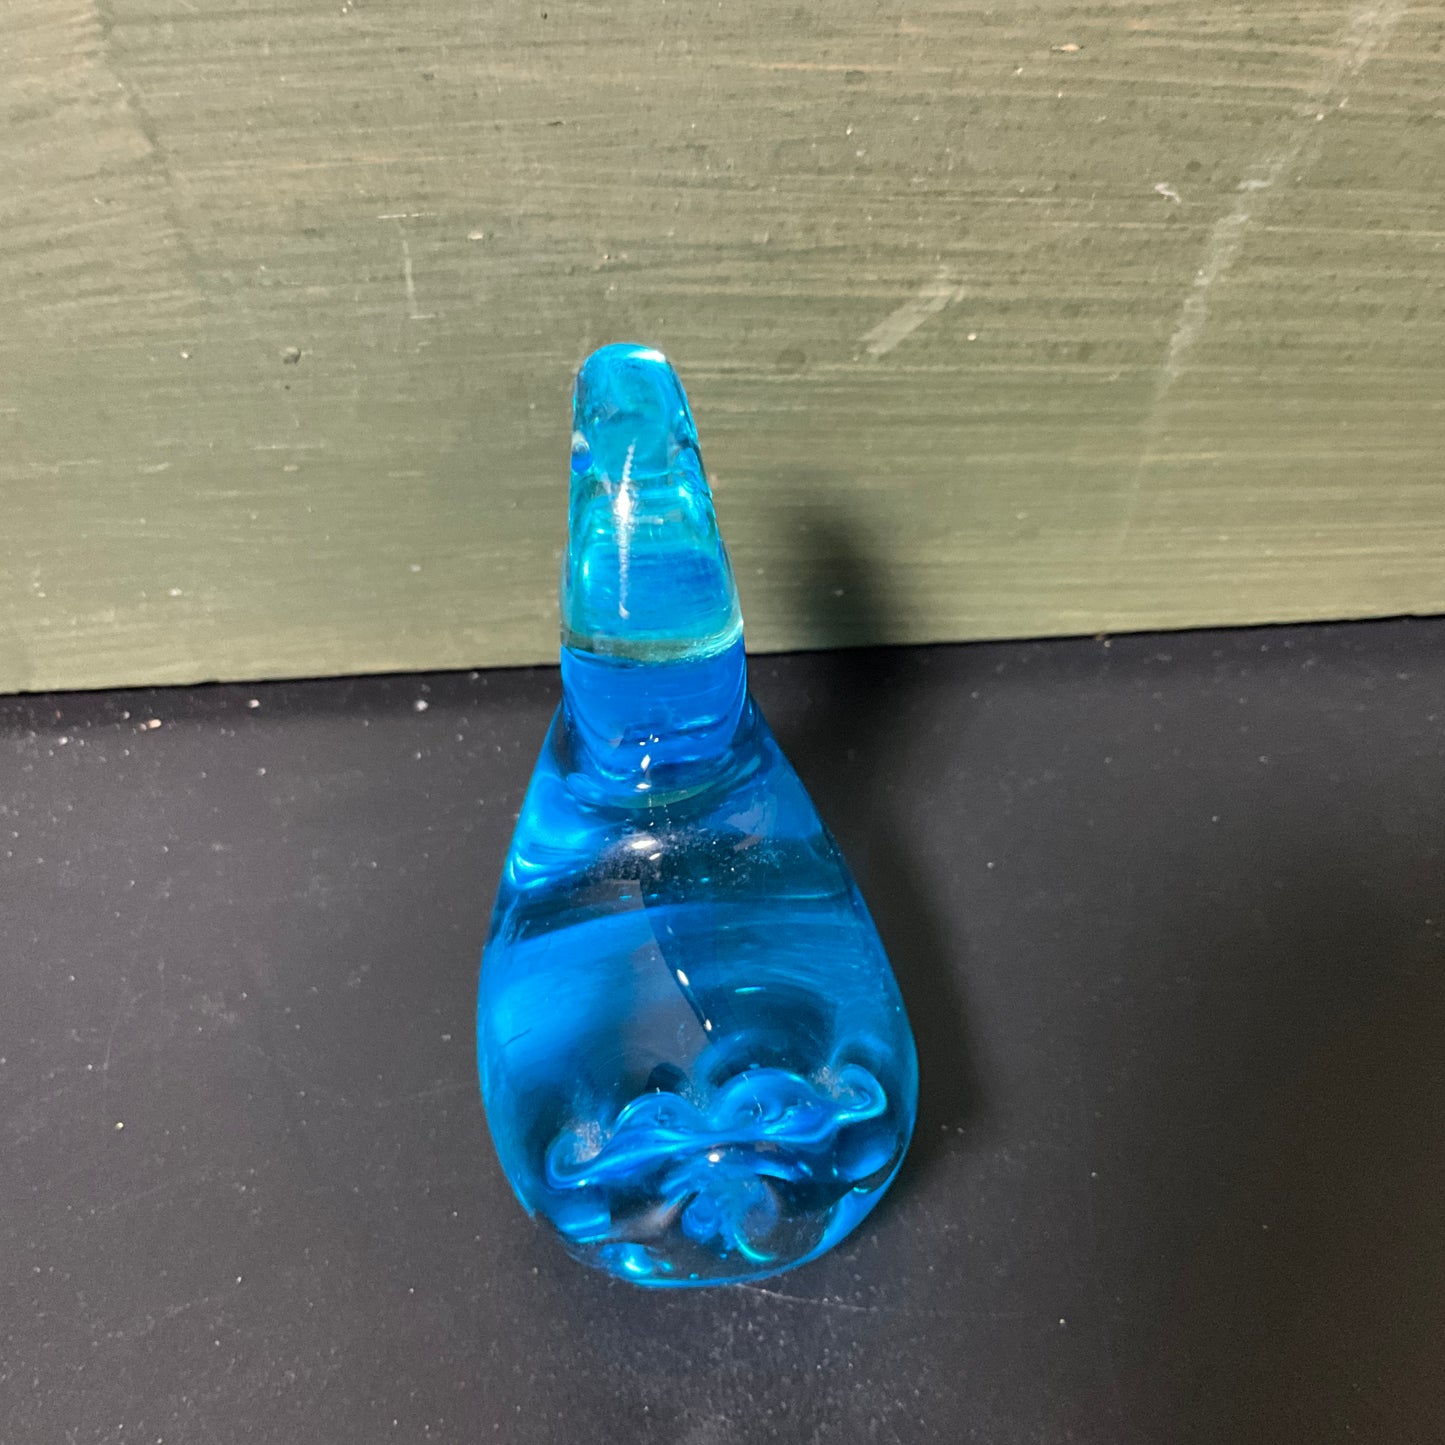 Beautiful Blue Glass Duck figurine